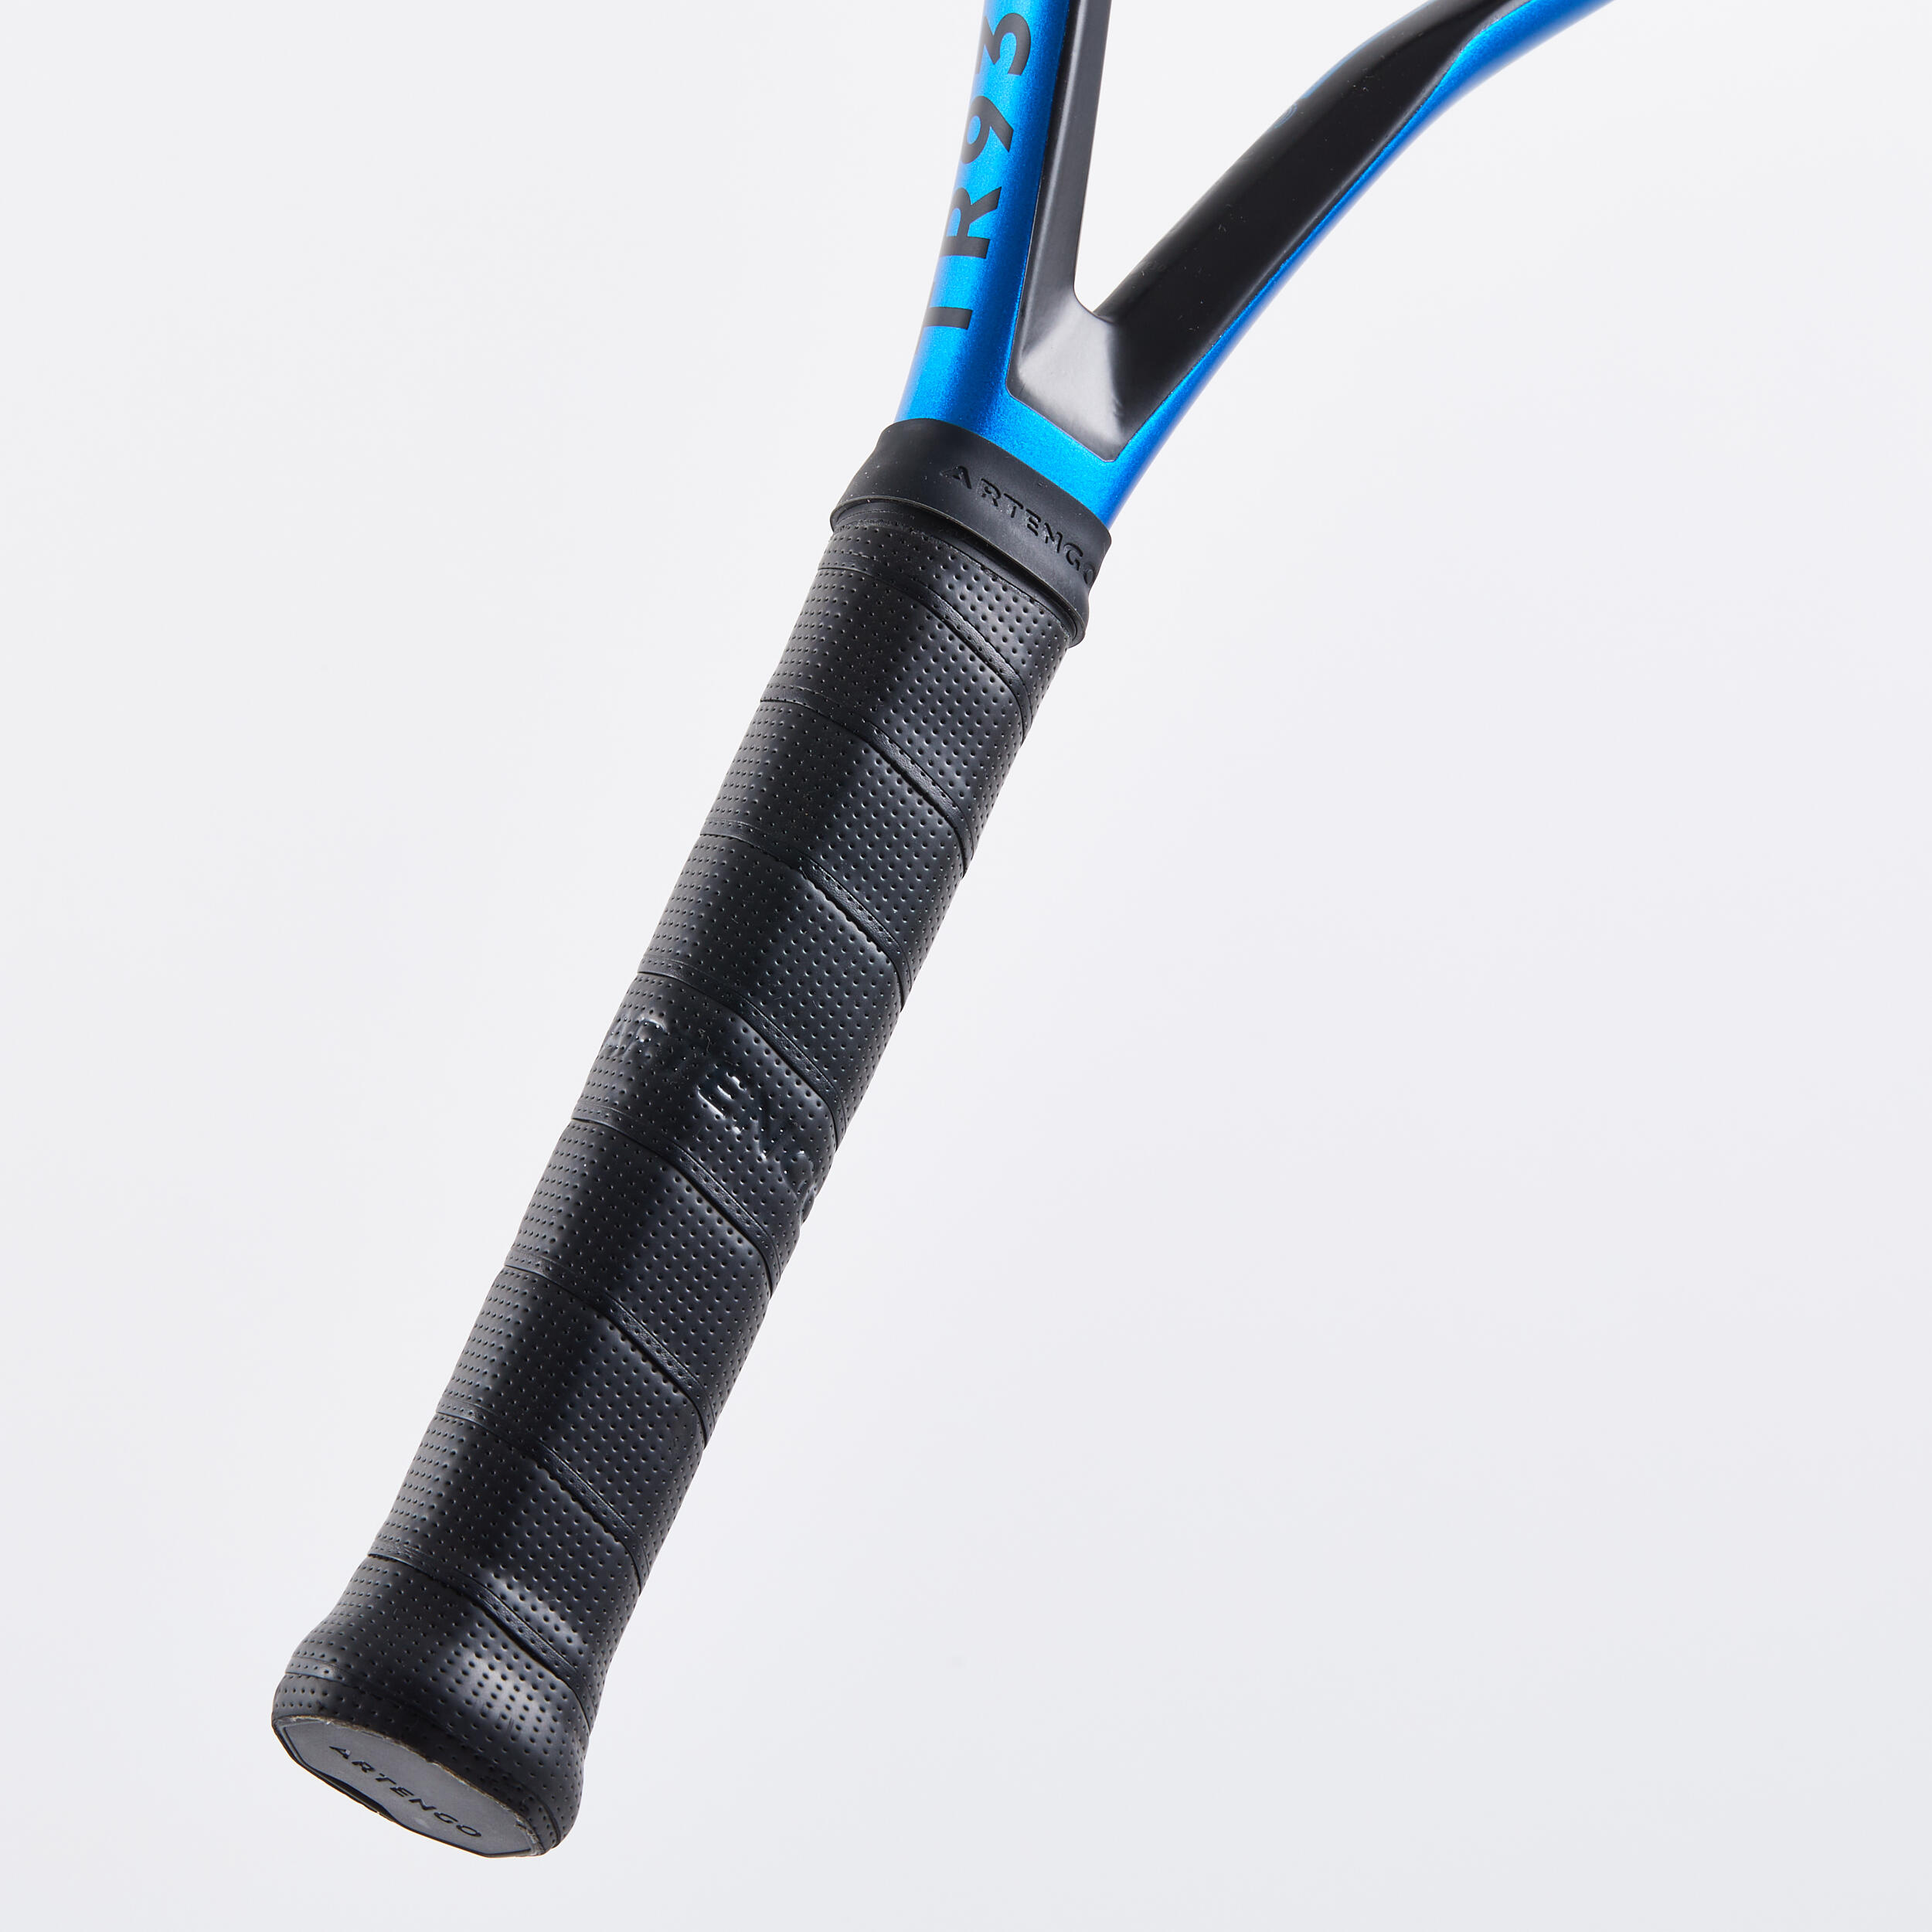 Adult Tennis Racket Spin Pro TR930 300g - Black/Blue 8/8